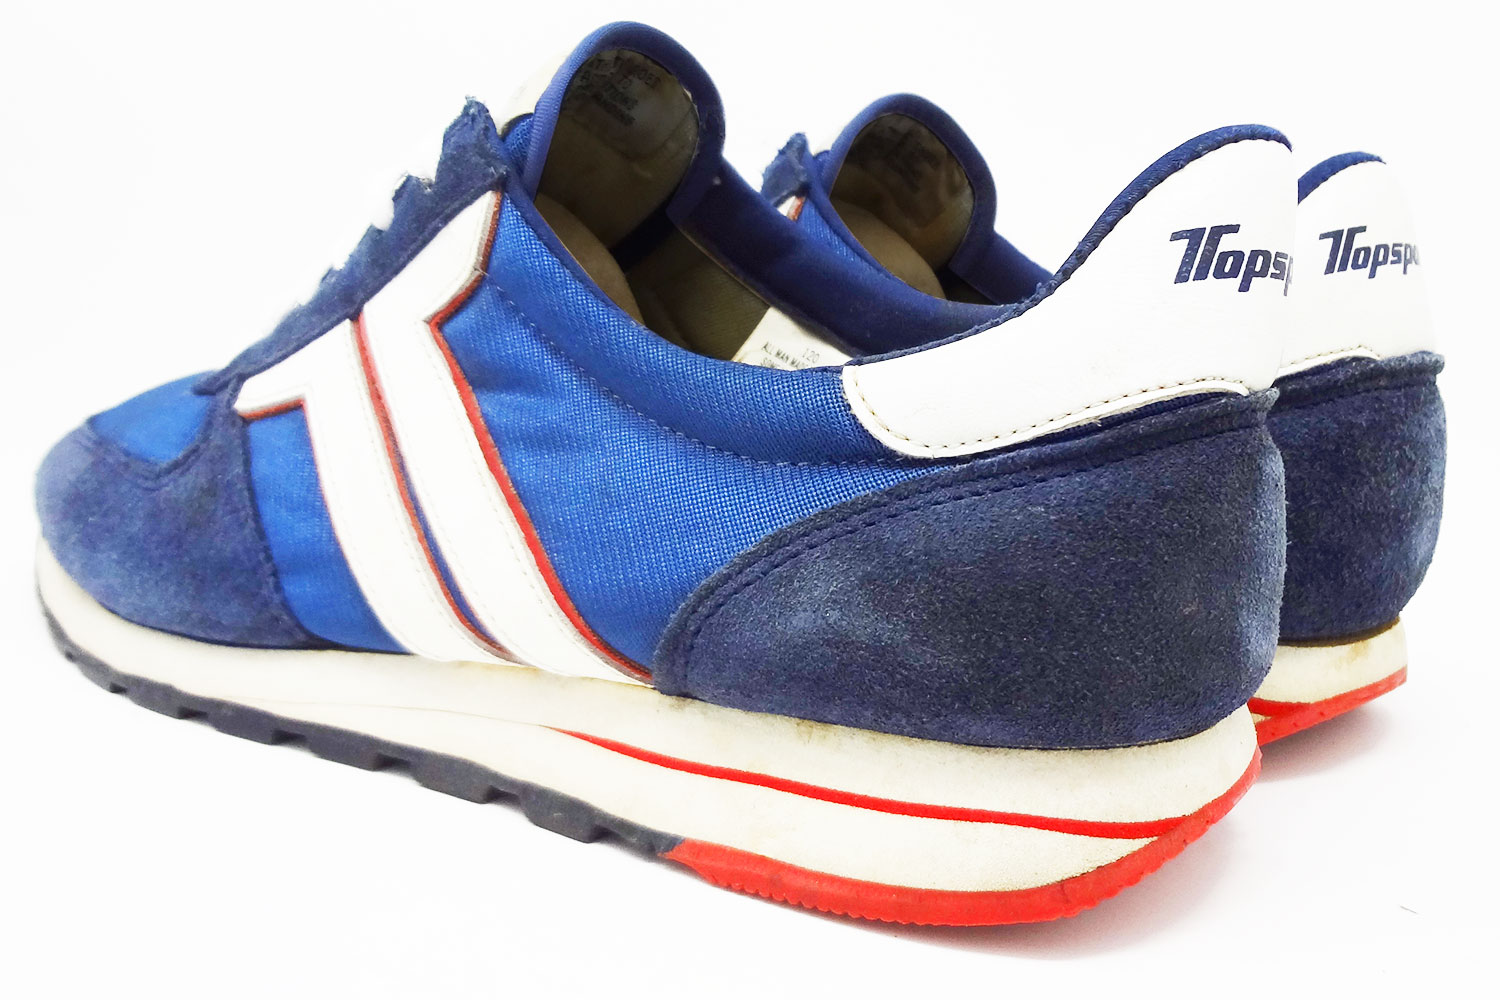 1980s Topsport vintage sneakers @ The Deffest